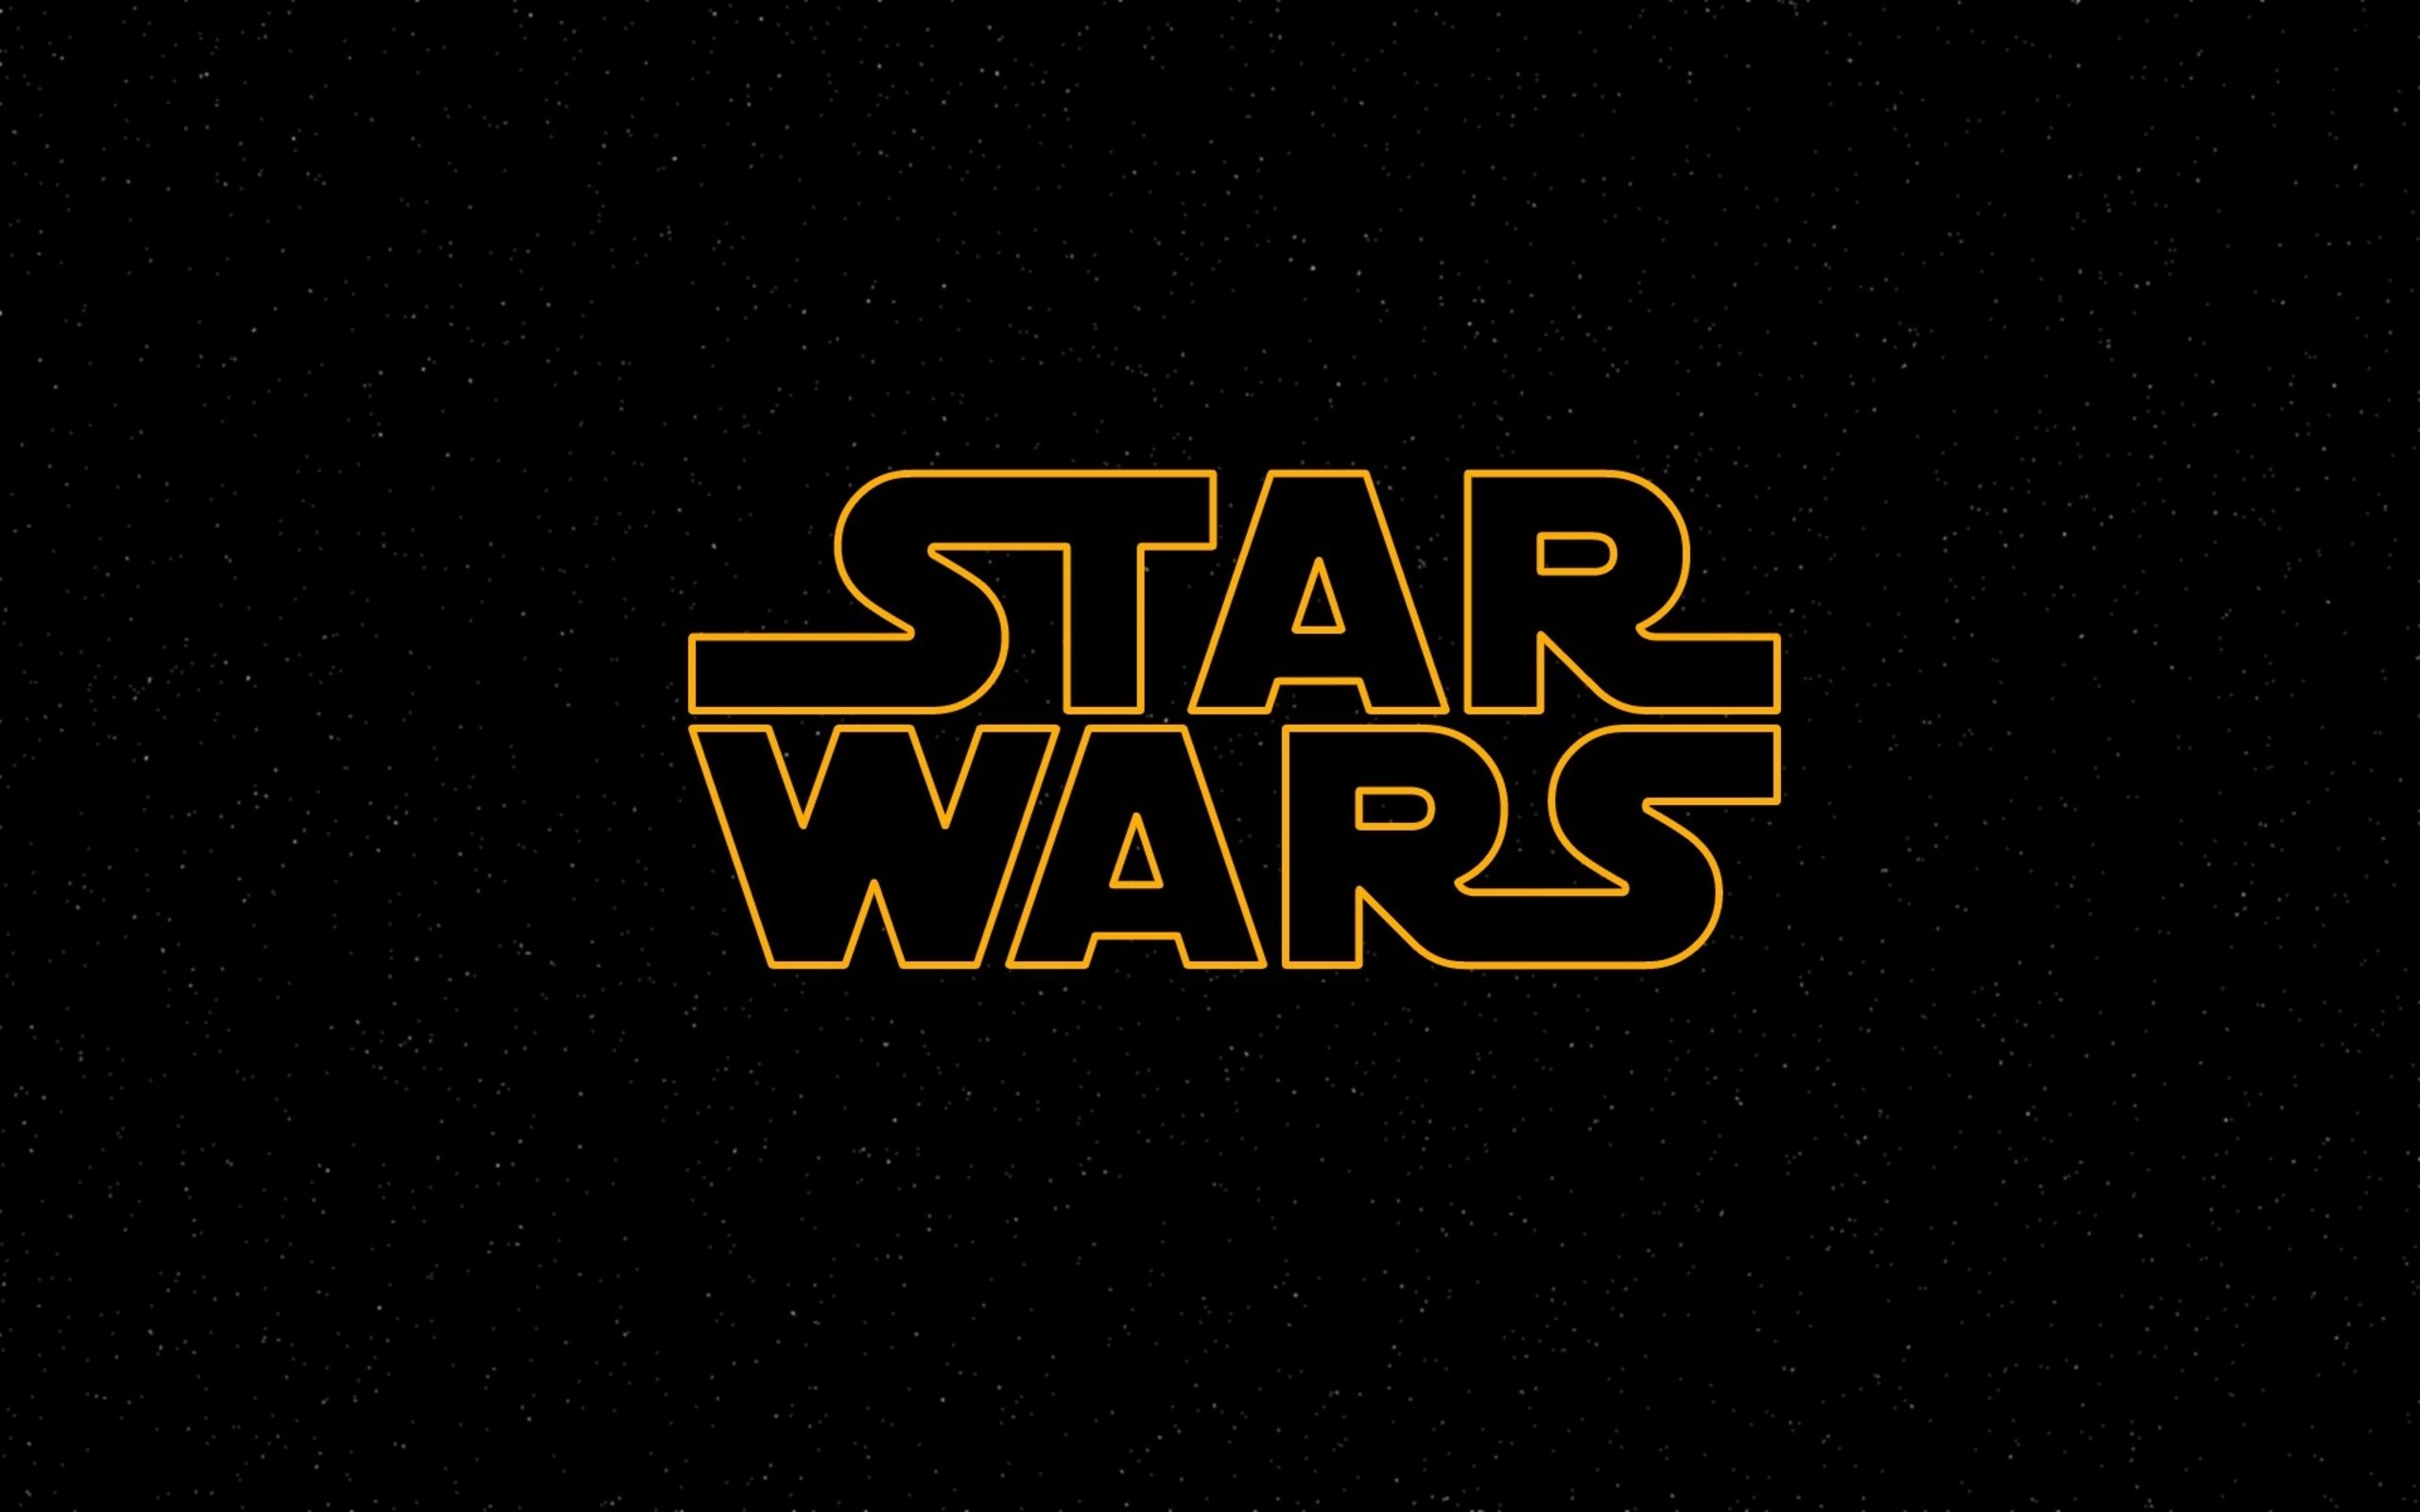 Star Wars Logos Black Background Wallpaper